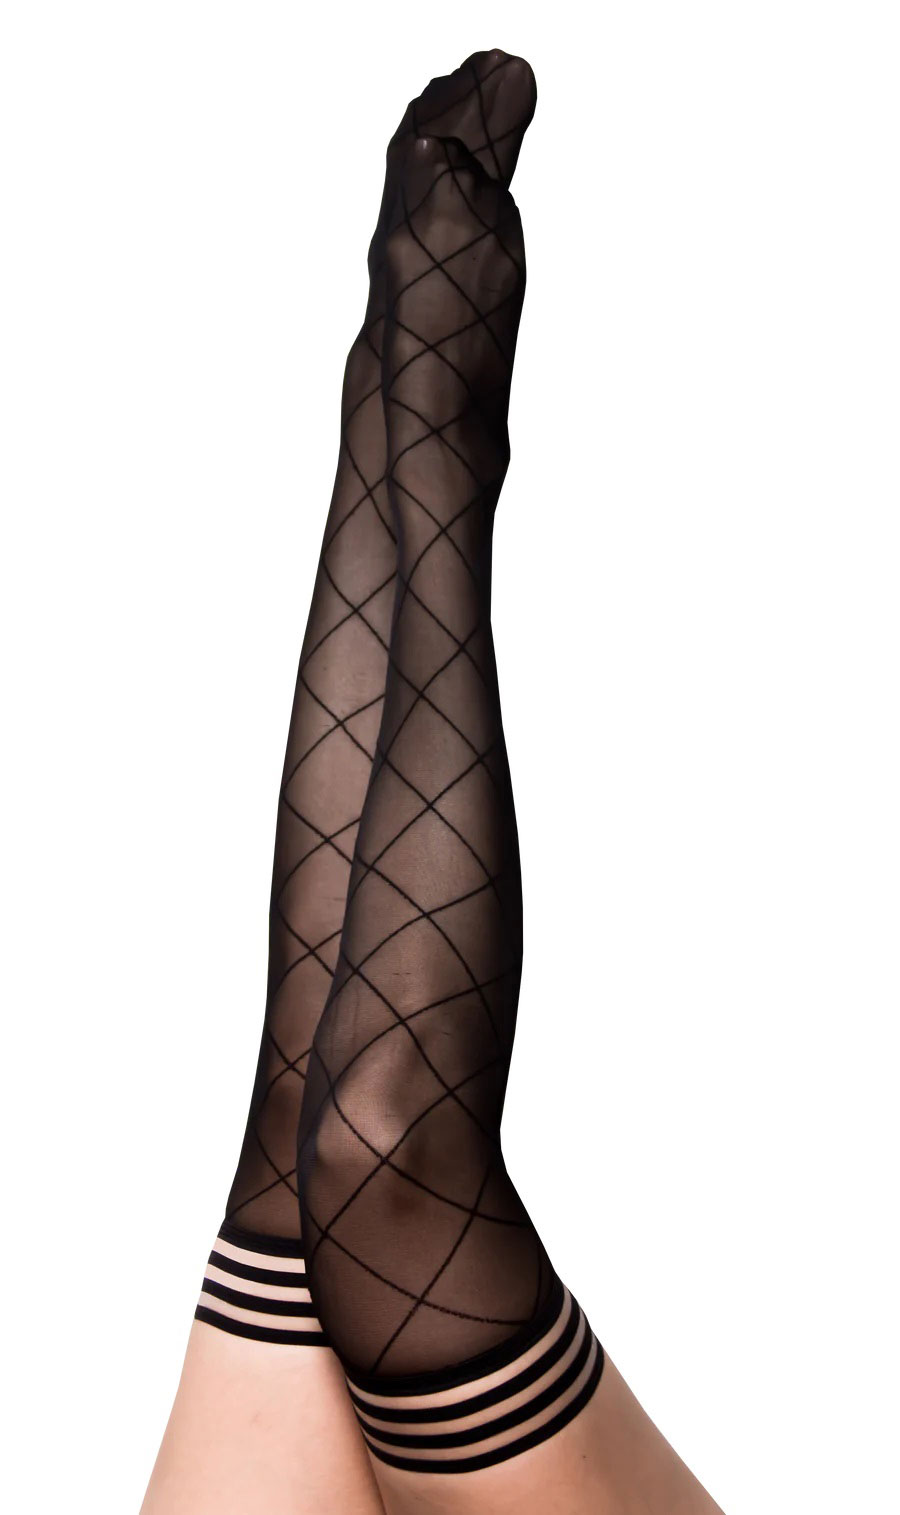 Anna - Diamond Thigh High - Size C - Black